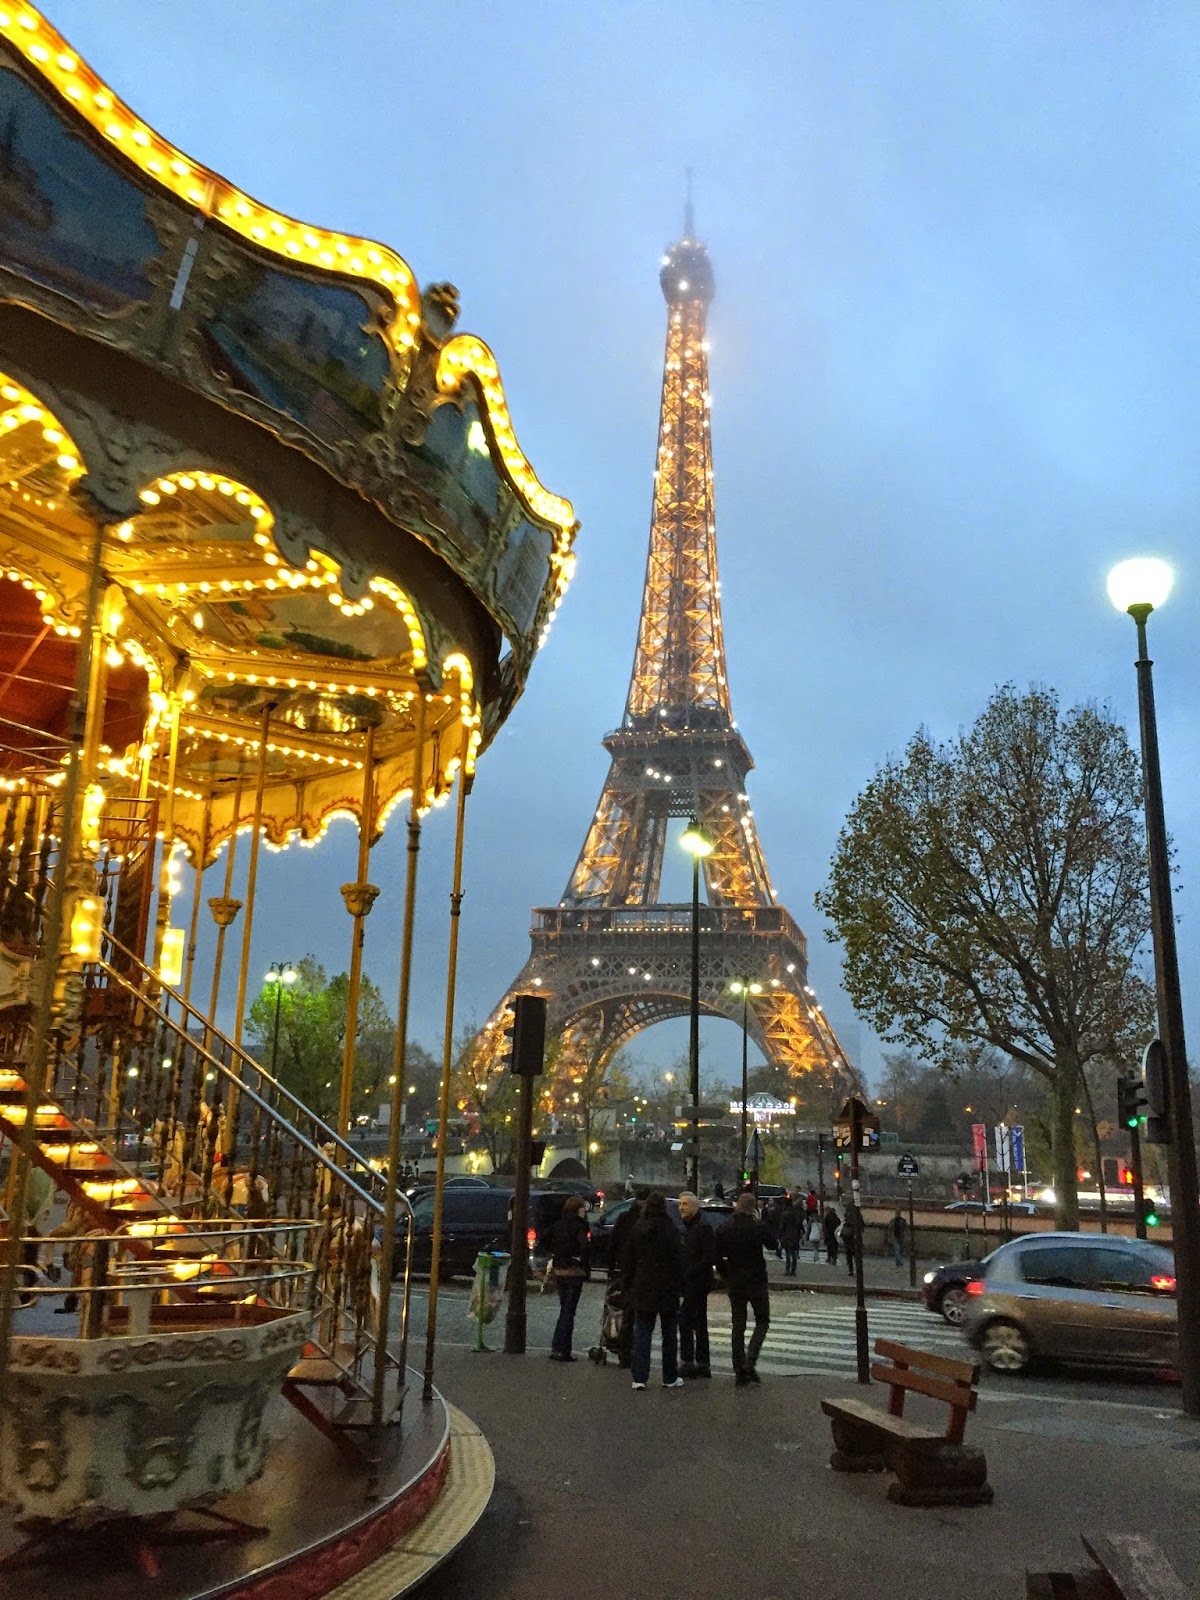 Paris, Eiffel Tower, Carousel on the Place du Trocadéro